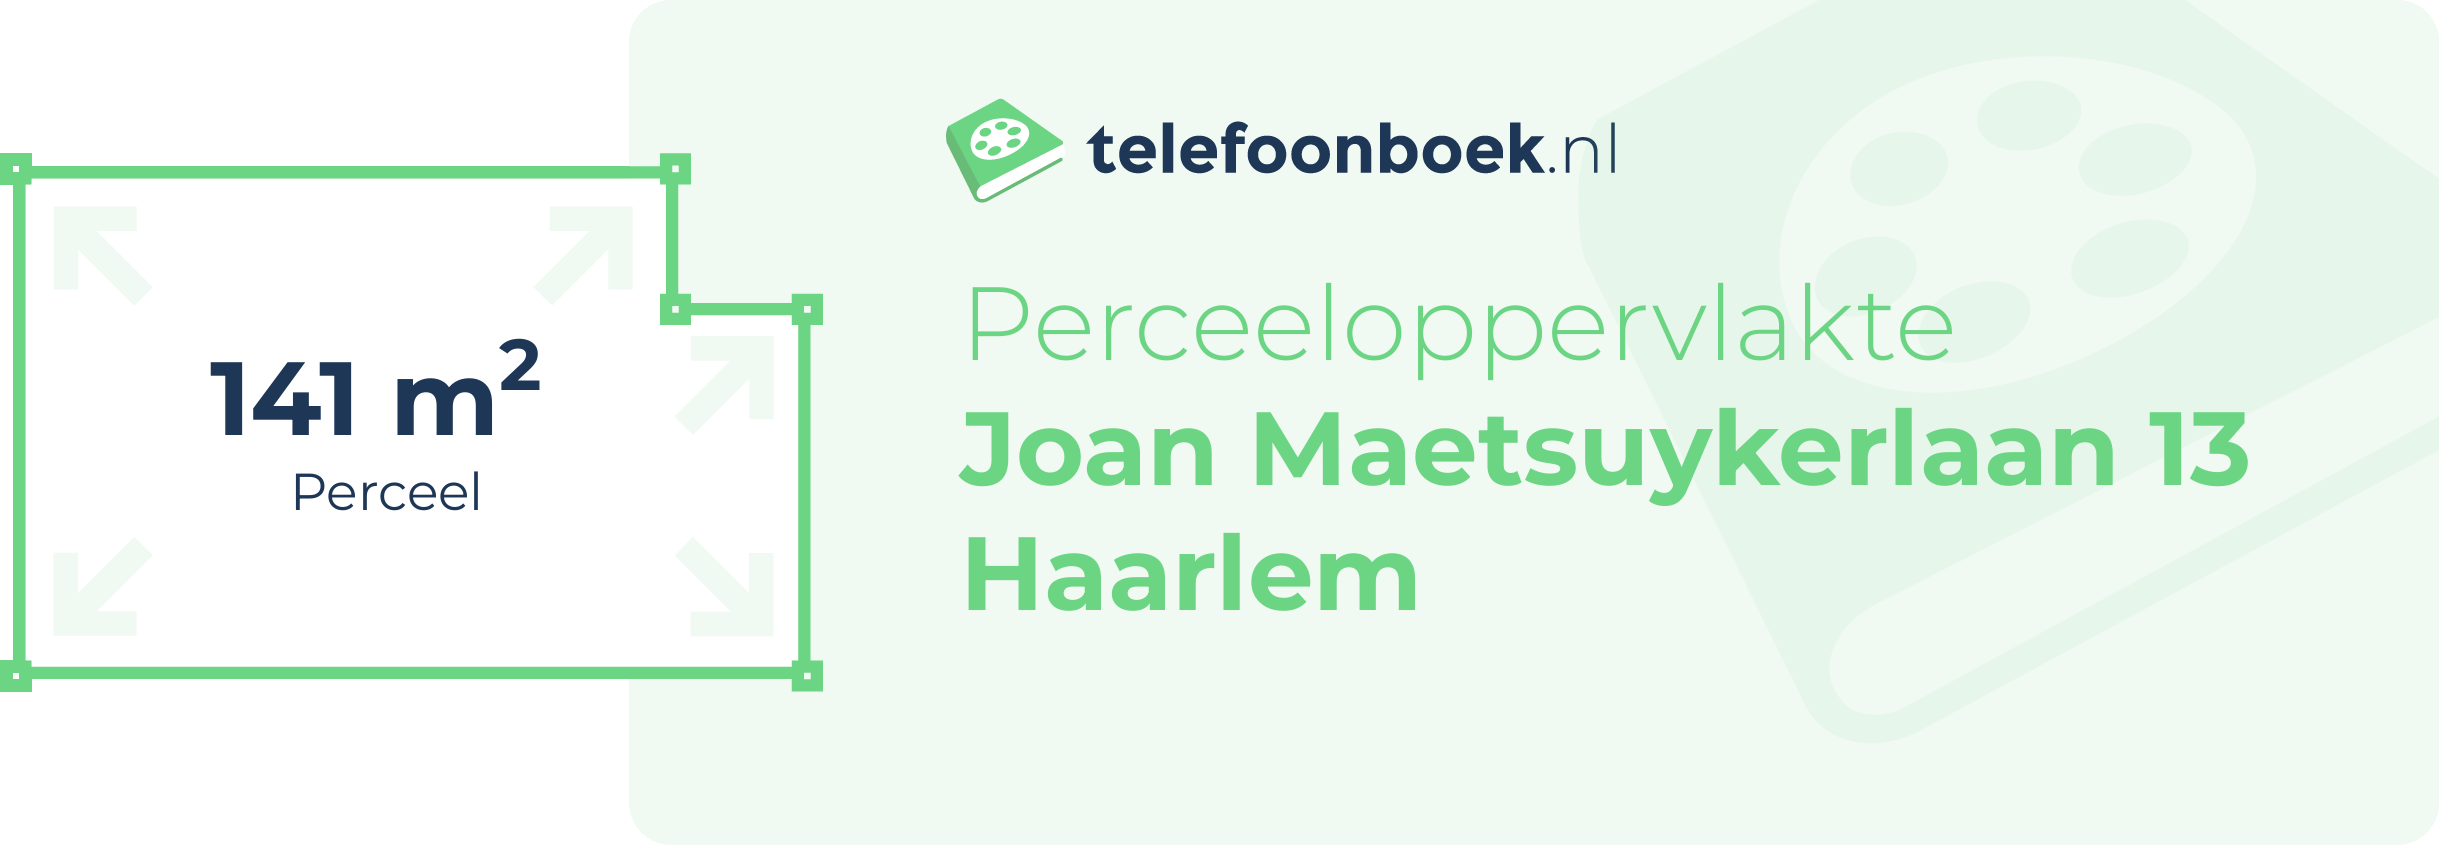 Perceeloppervlakte Joan Maetsuykerlaan 13 Haarlem